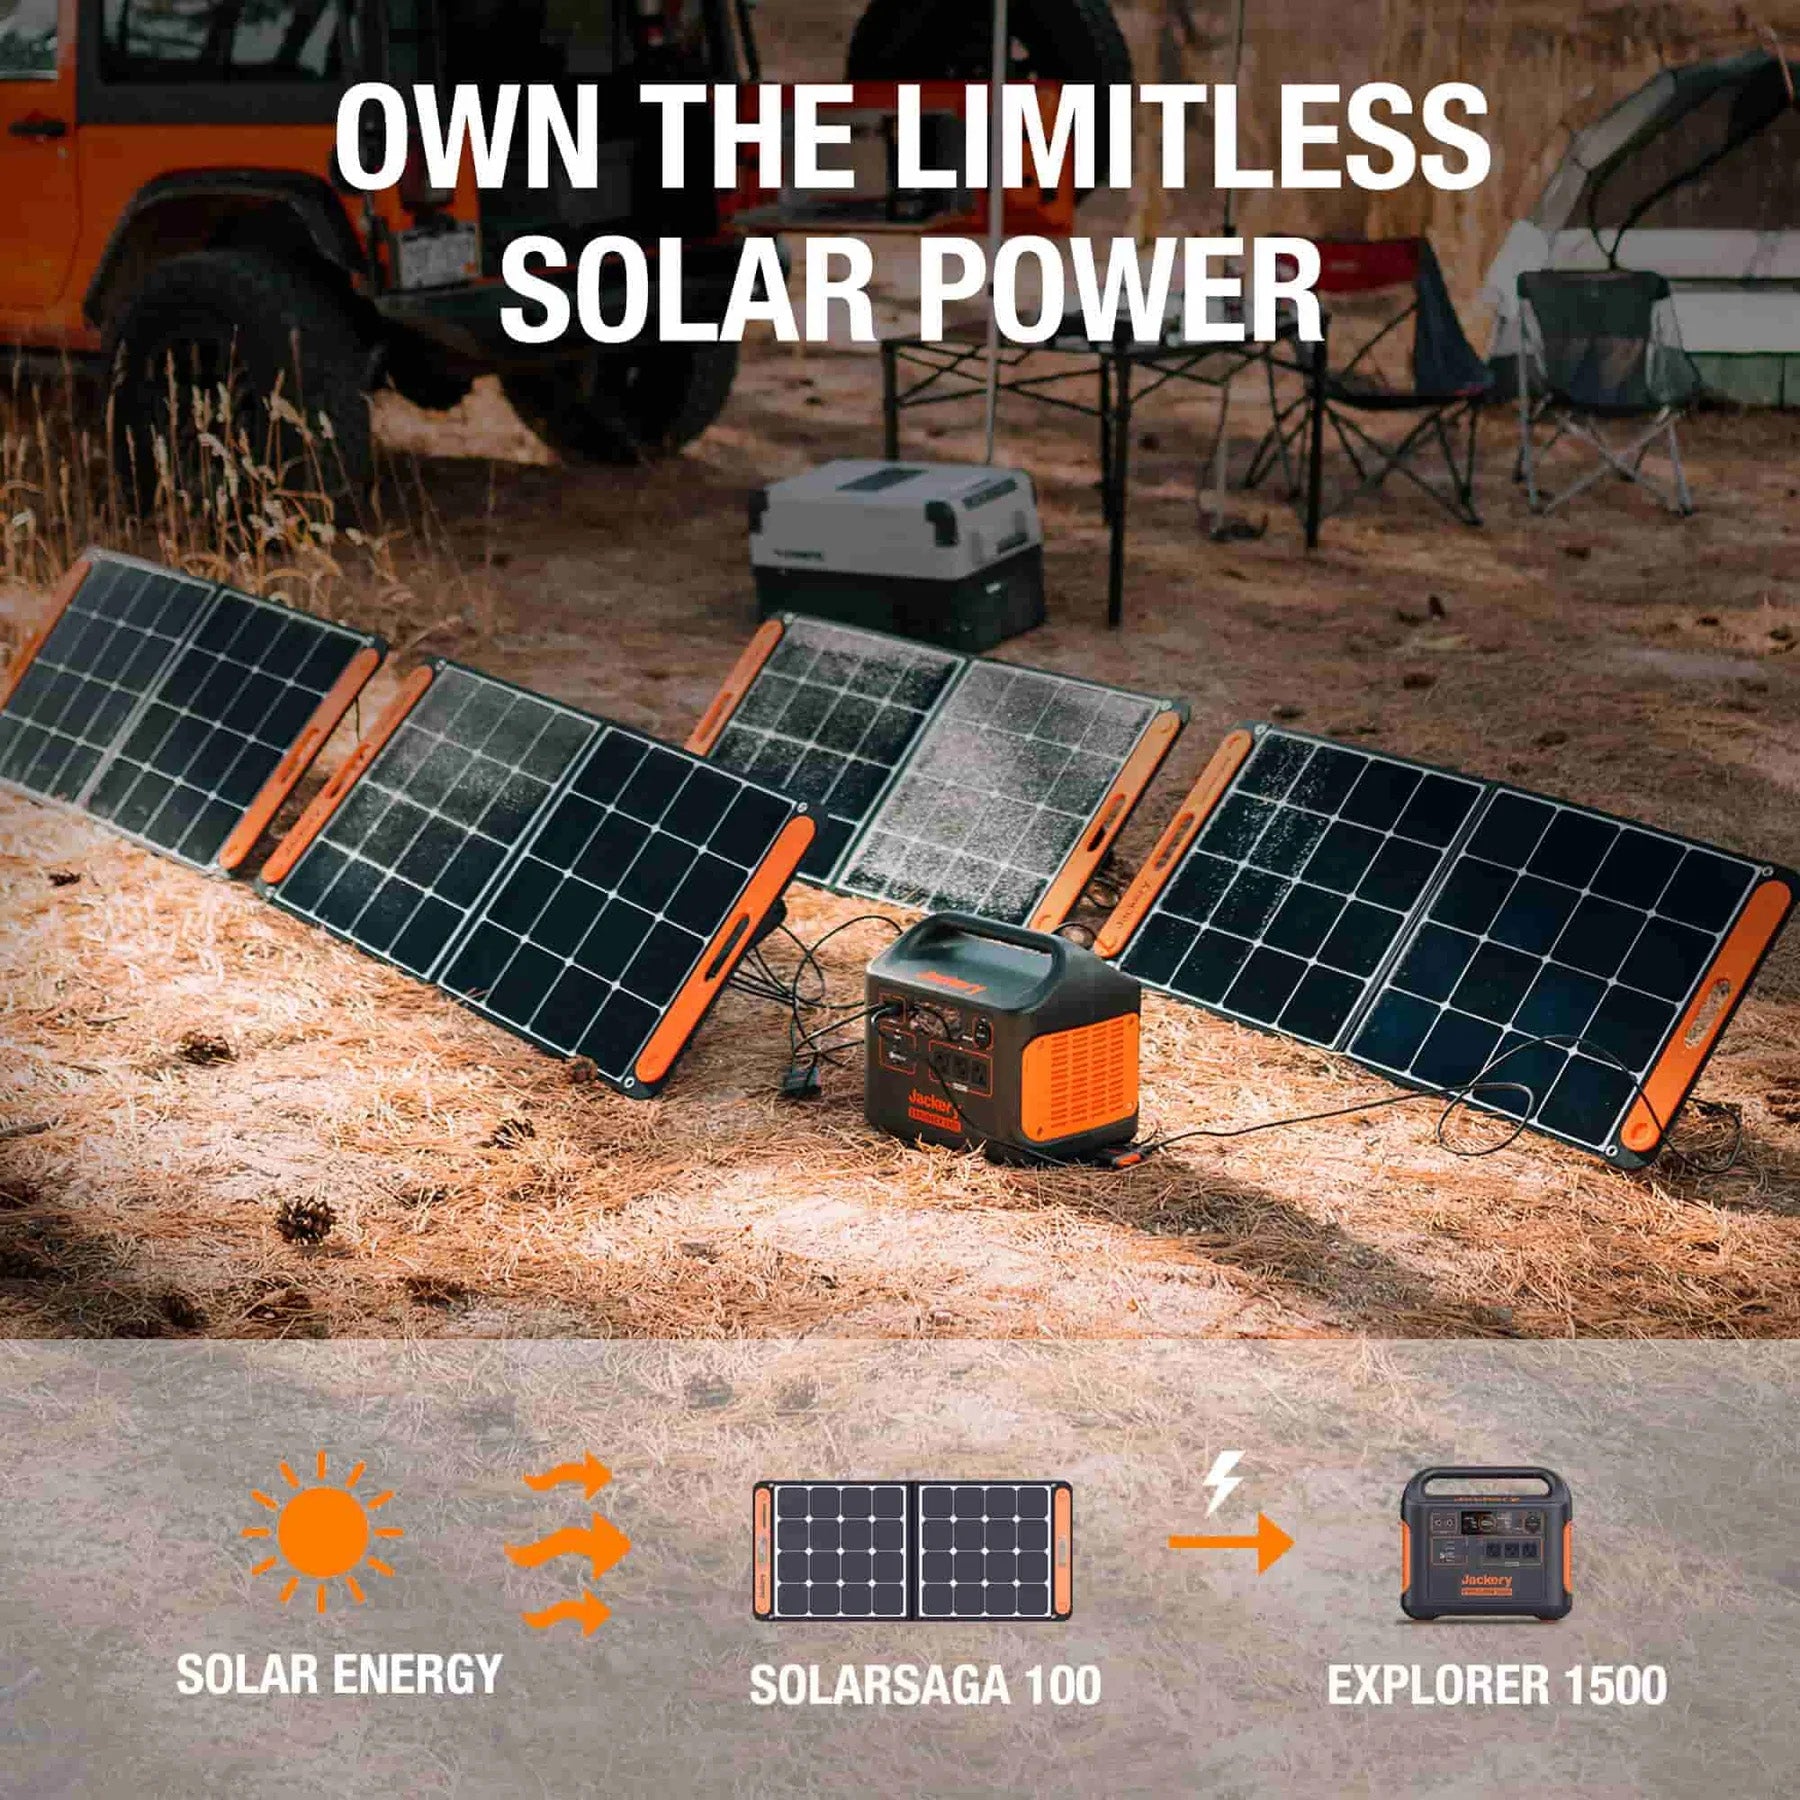 Jackery Solar Generator 1500 - Own the Limitless Solar Power